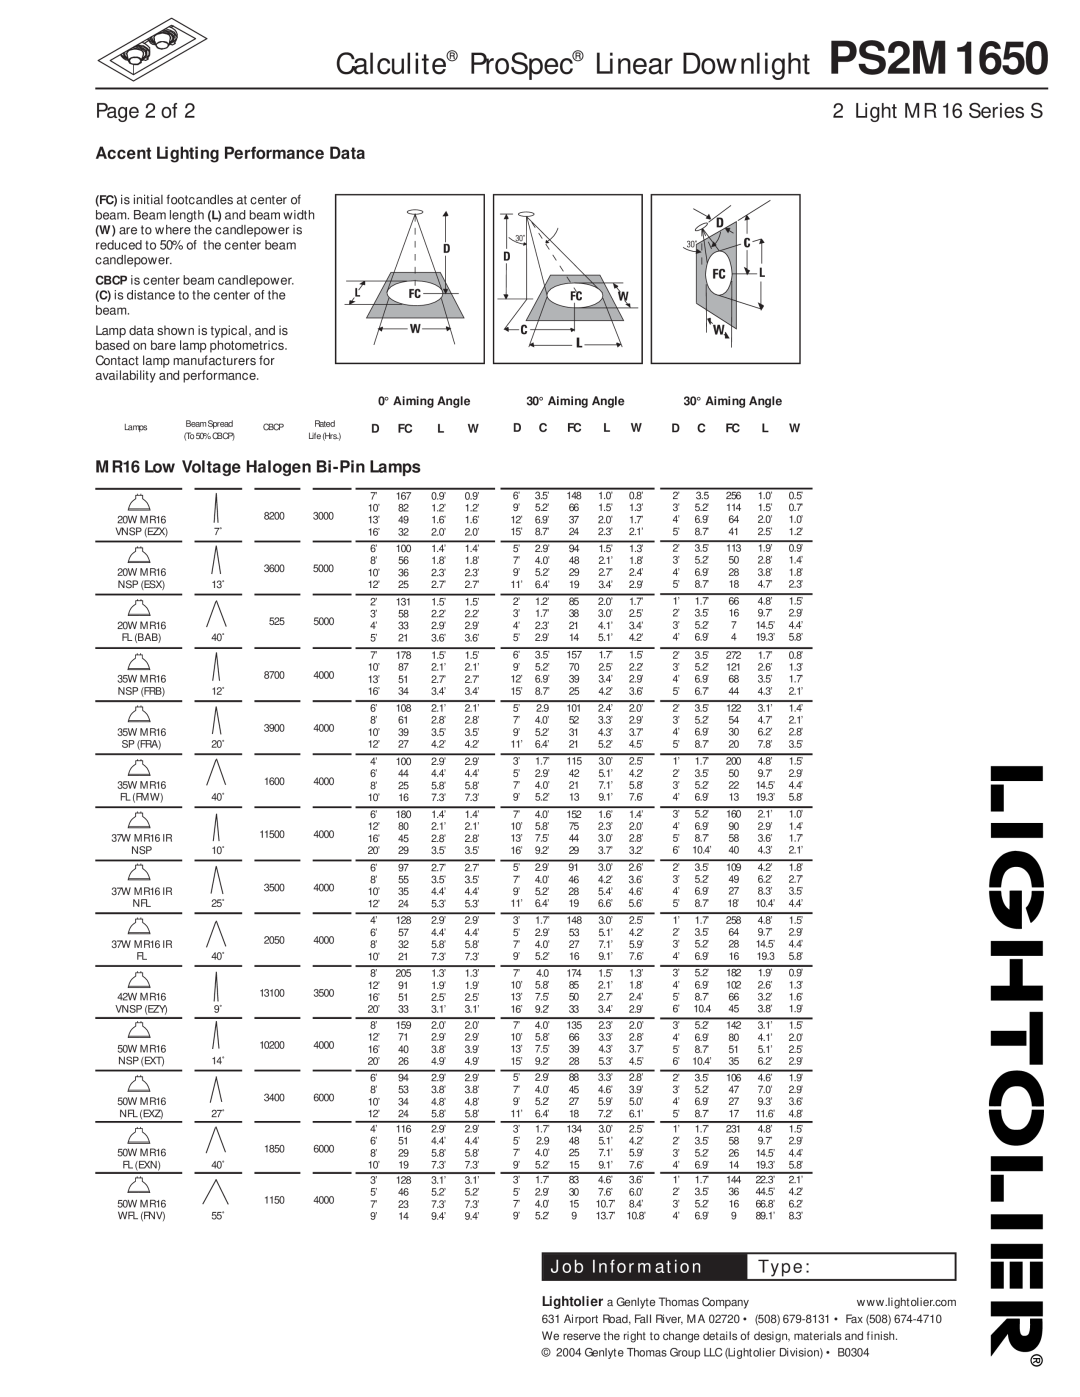 Lightolier PS2M1650 Page 2 of, Accent Lighting Performance Data, MR16 Low Voltage Halogen Bi-PinLamps, Job Information 